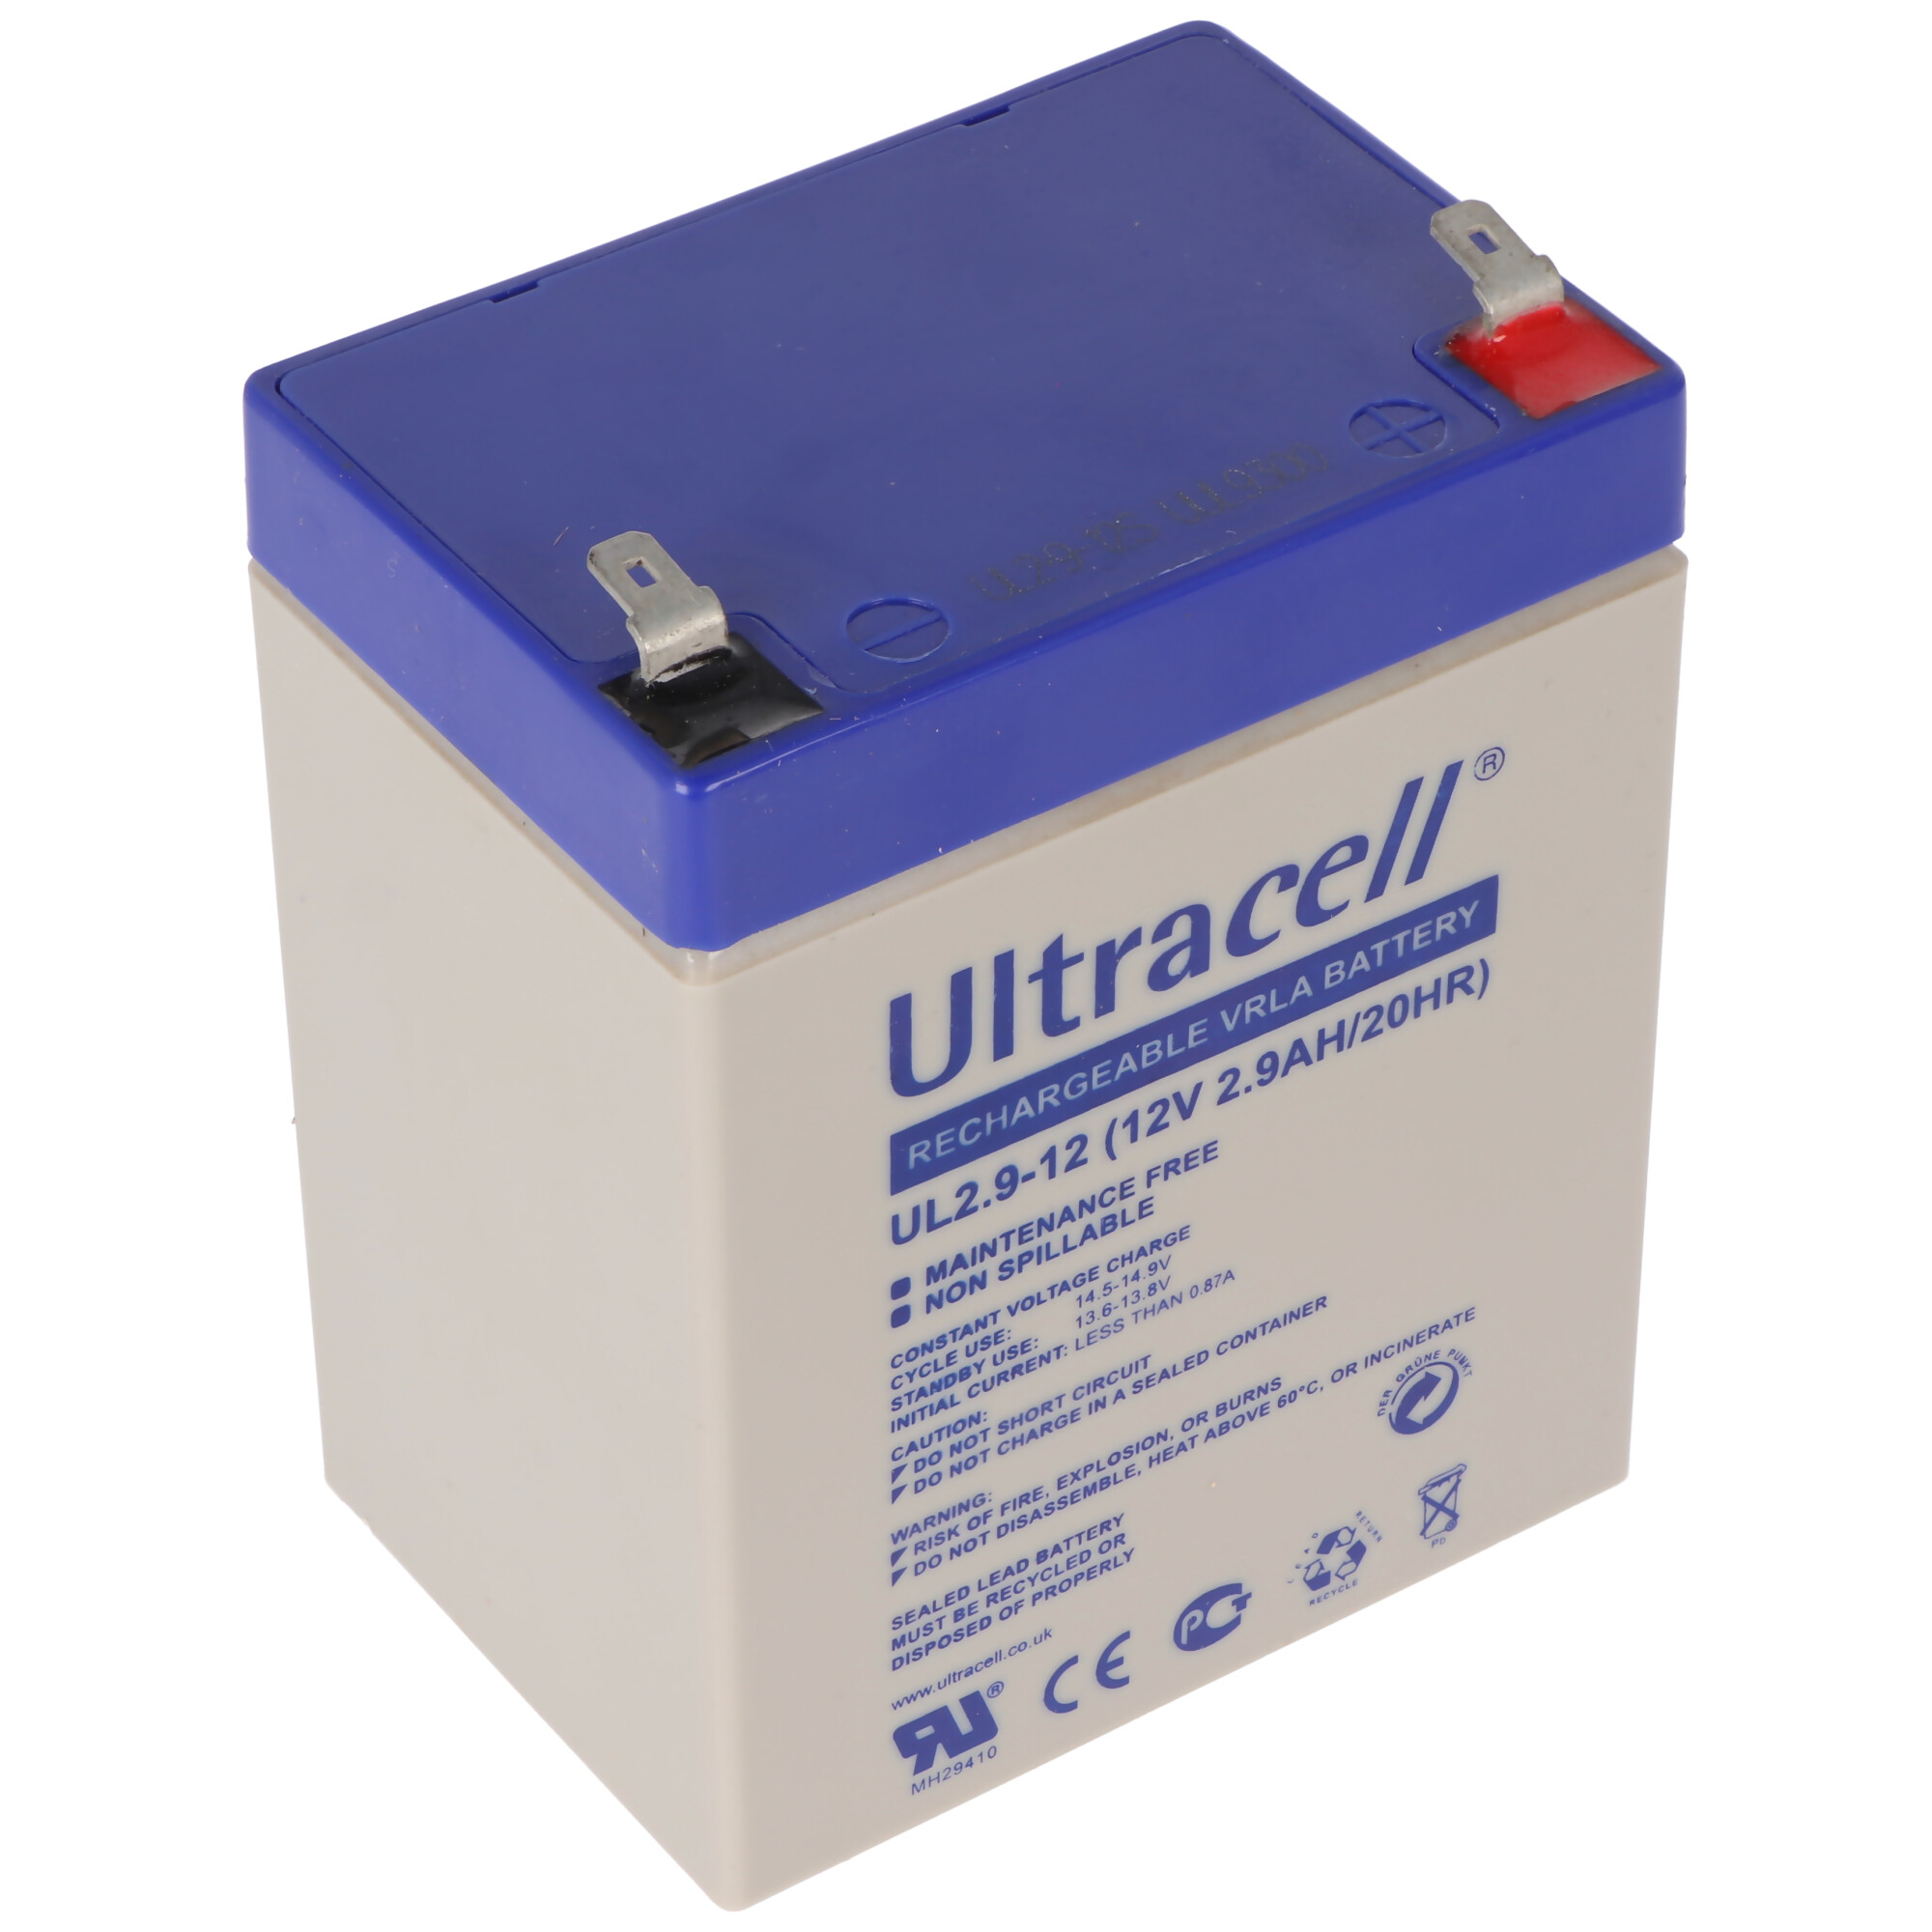 Ultracell UL2.9-12 12V 2,9Ah Bleiakku AGM Blei Gel Akku 4,8mm Steckkontakte